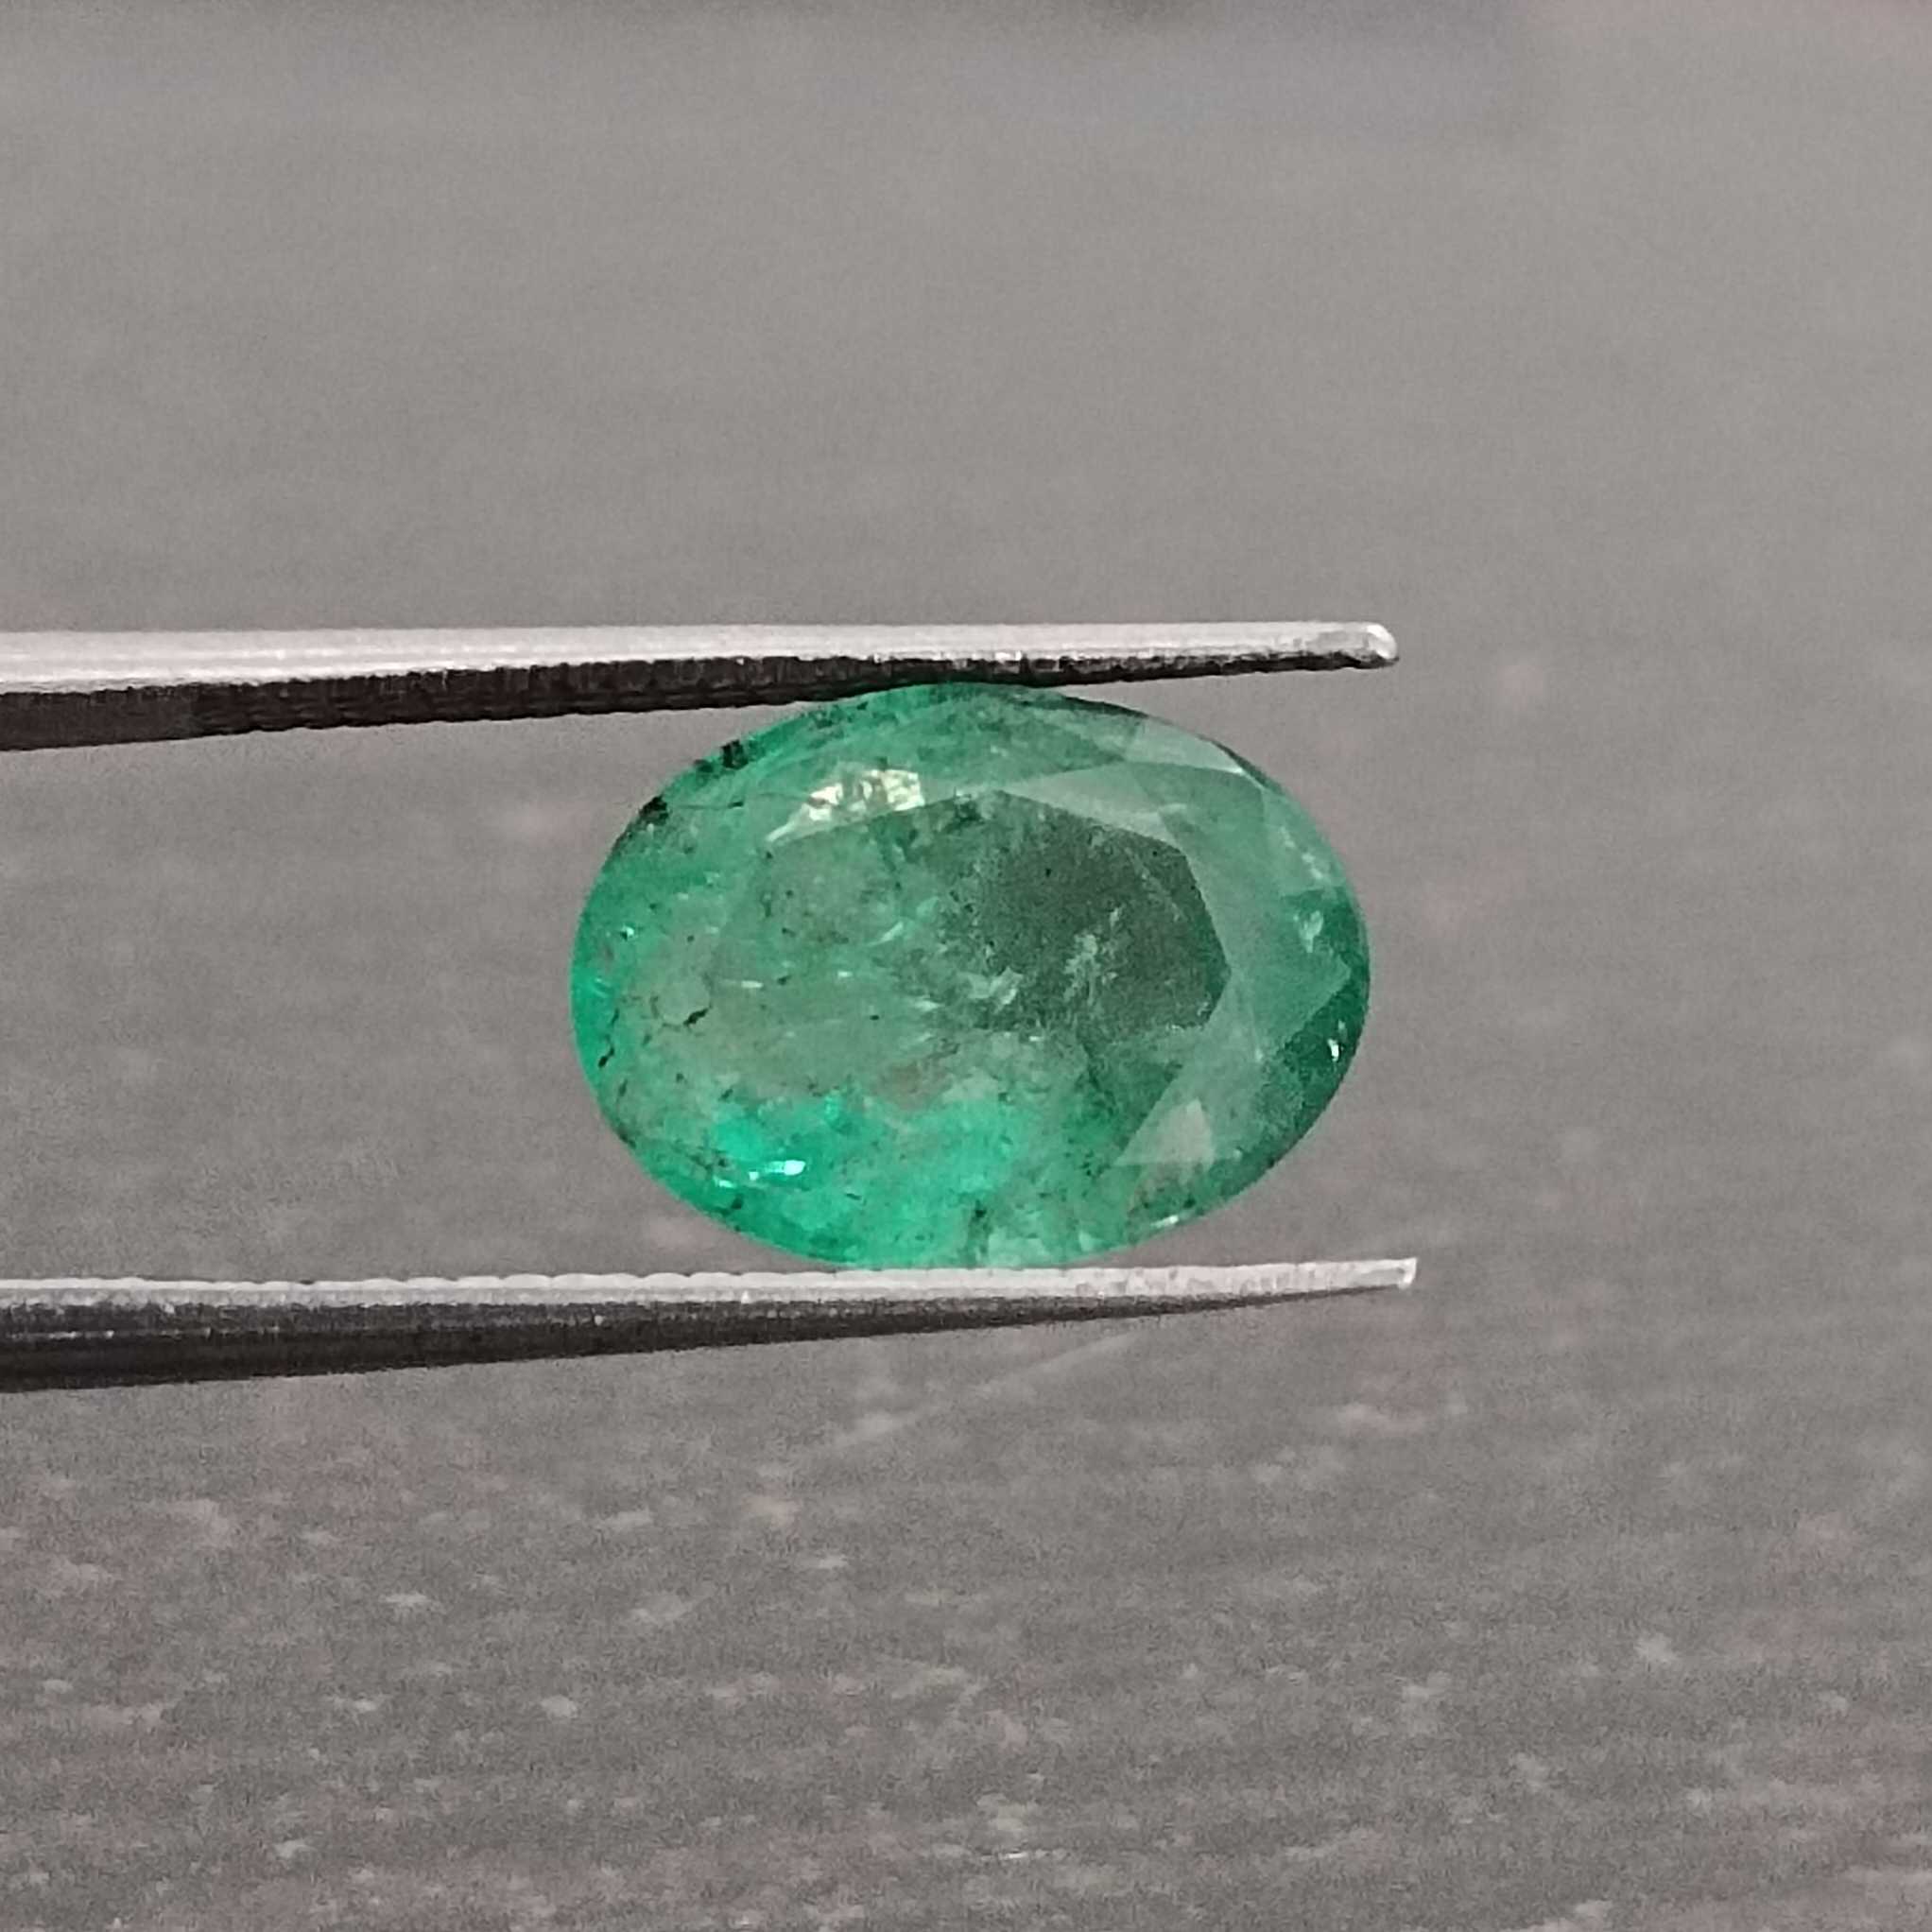 2.78ct vivid green oval cut Colombian emerald